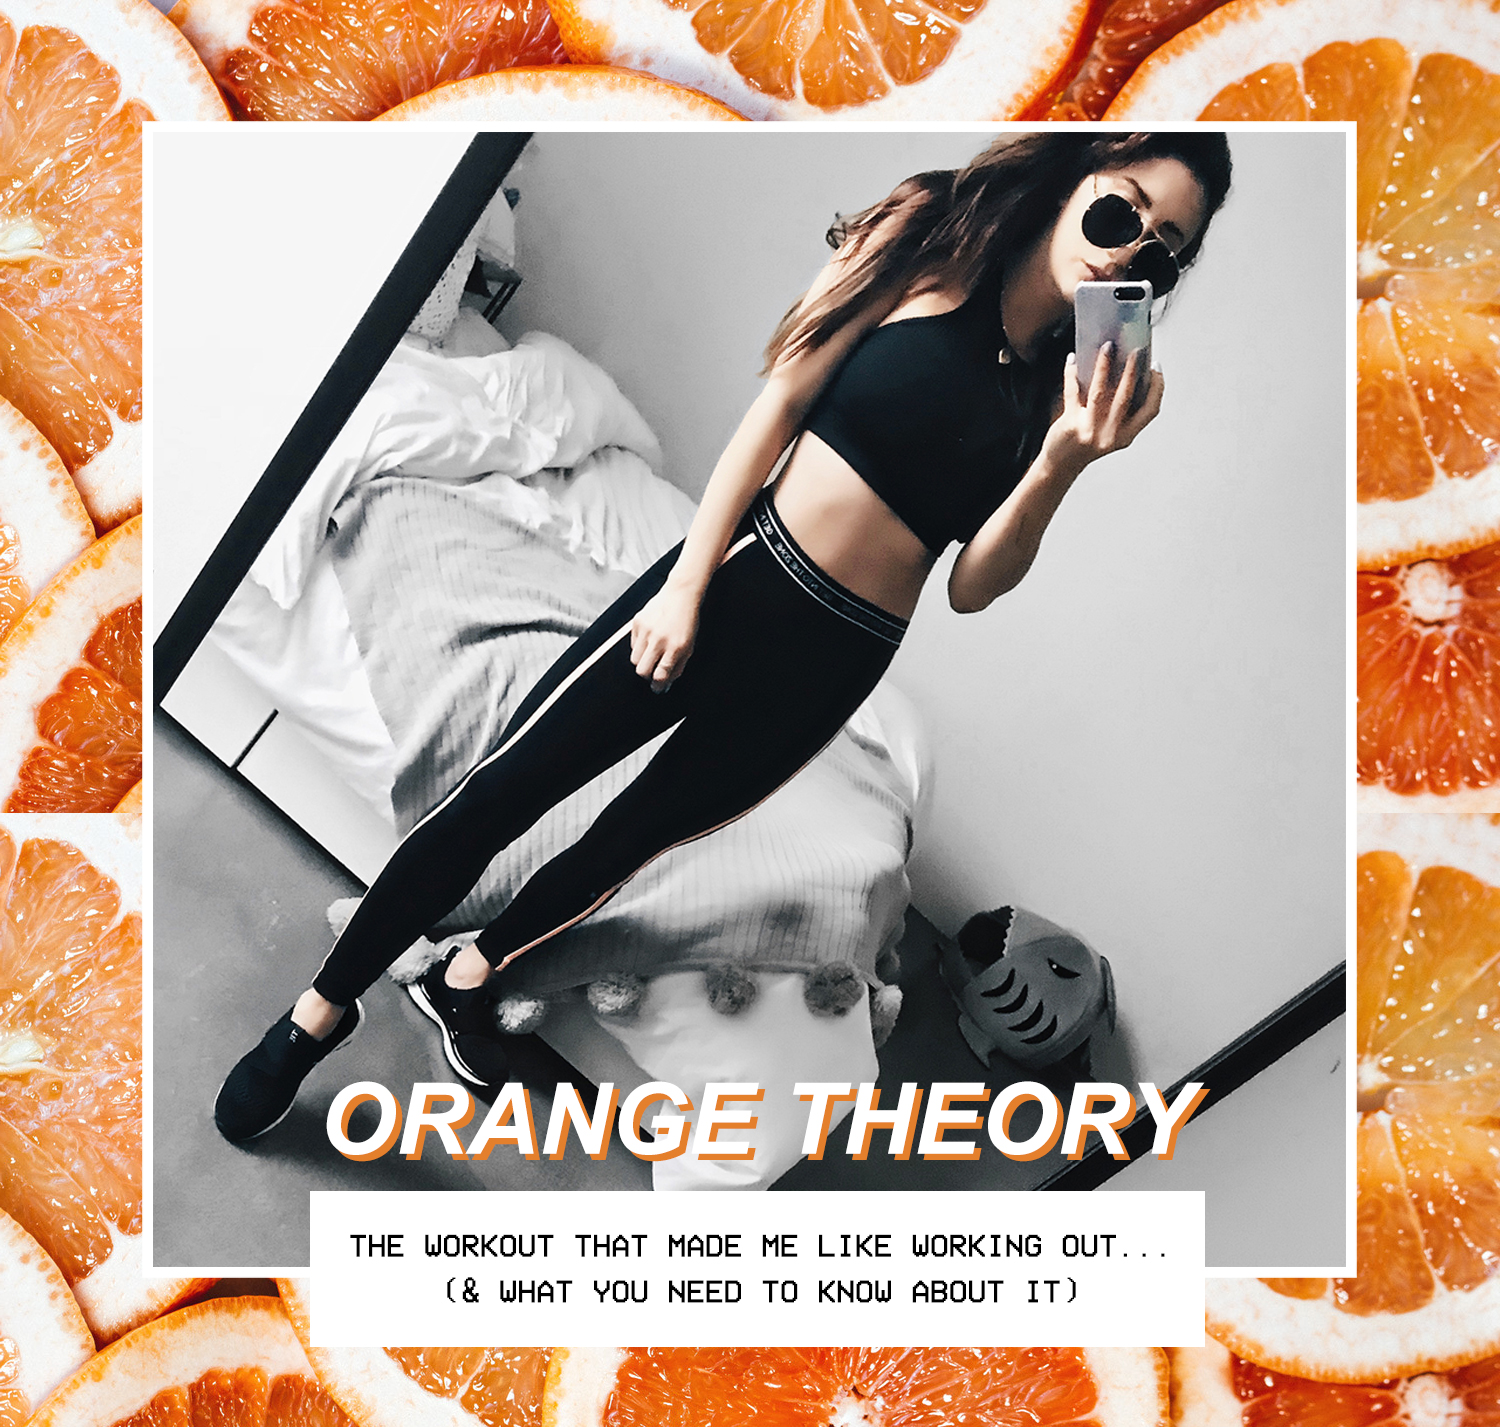 Orangetheory Says Life Changes in the Orange Zone in Latest Ad